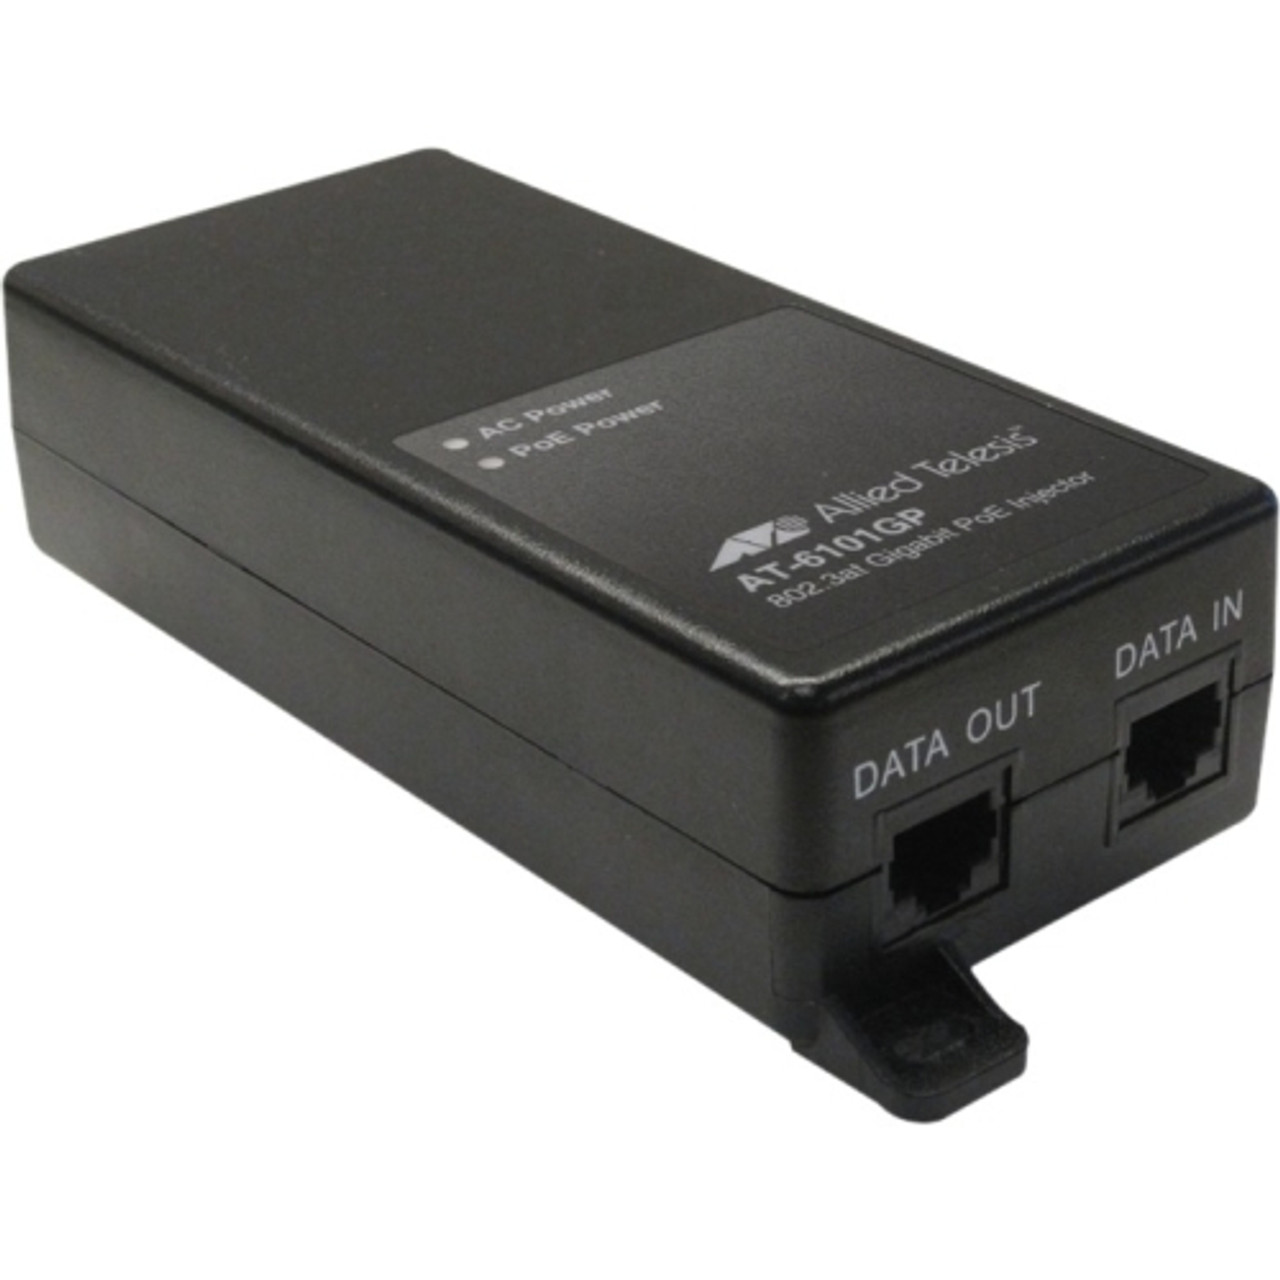 AT-6101GP-10 Allied Telesis Single Port Poe Plus Injector Gigabit Ethernet